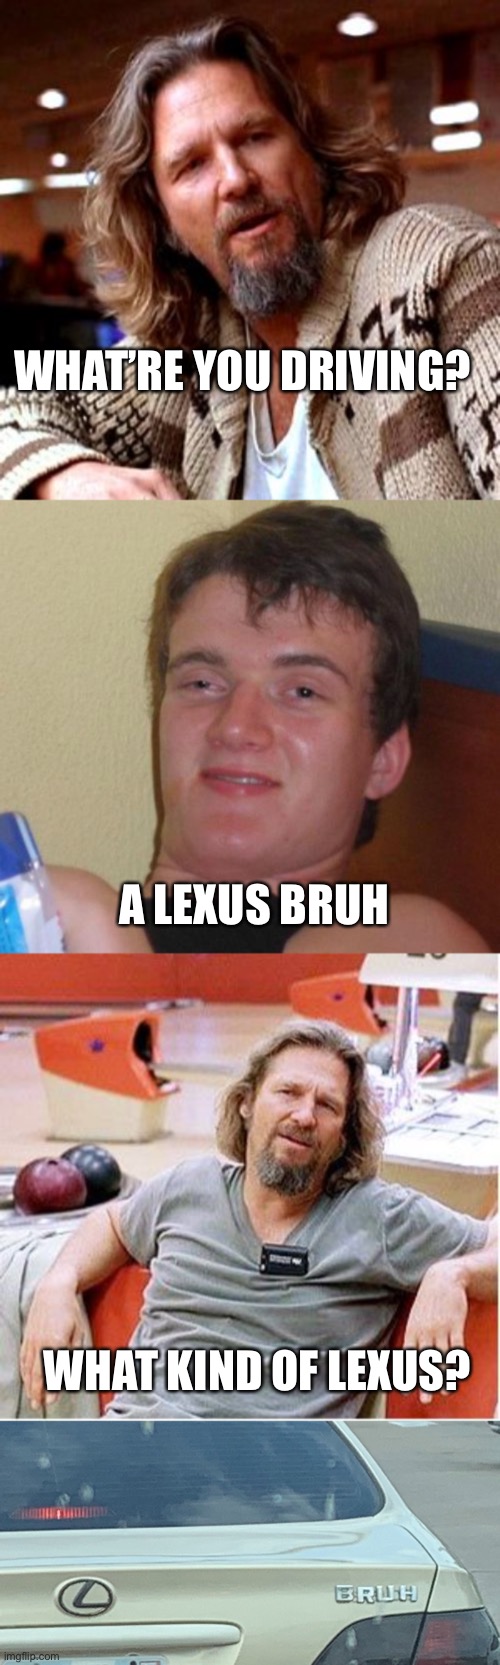 What kind of Lexus, bruh? Imgflip